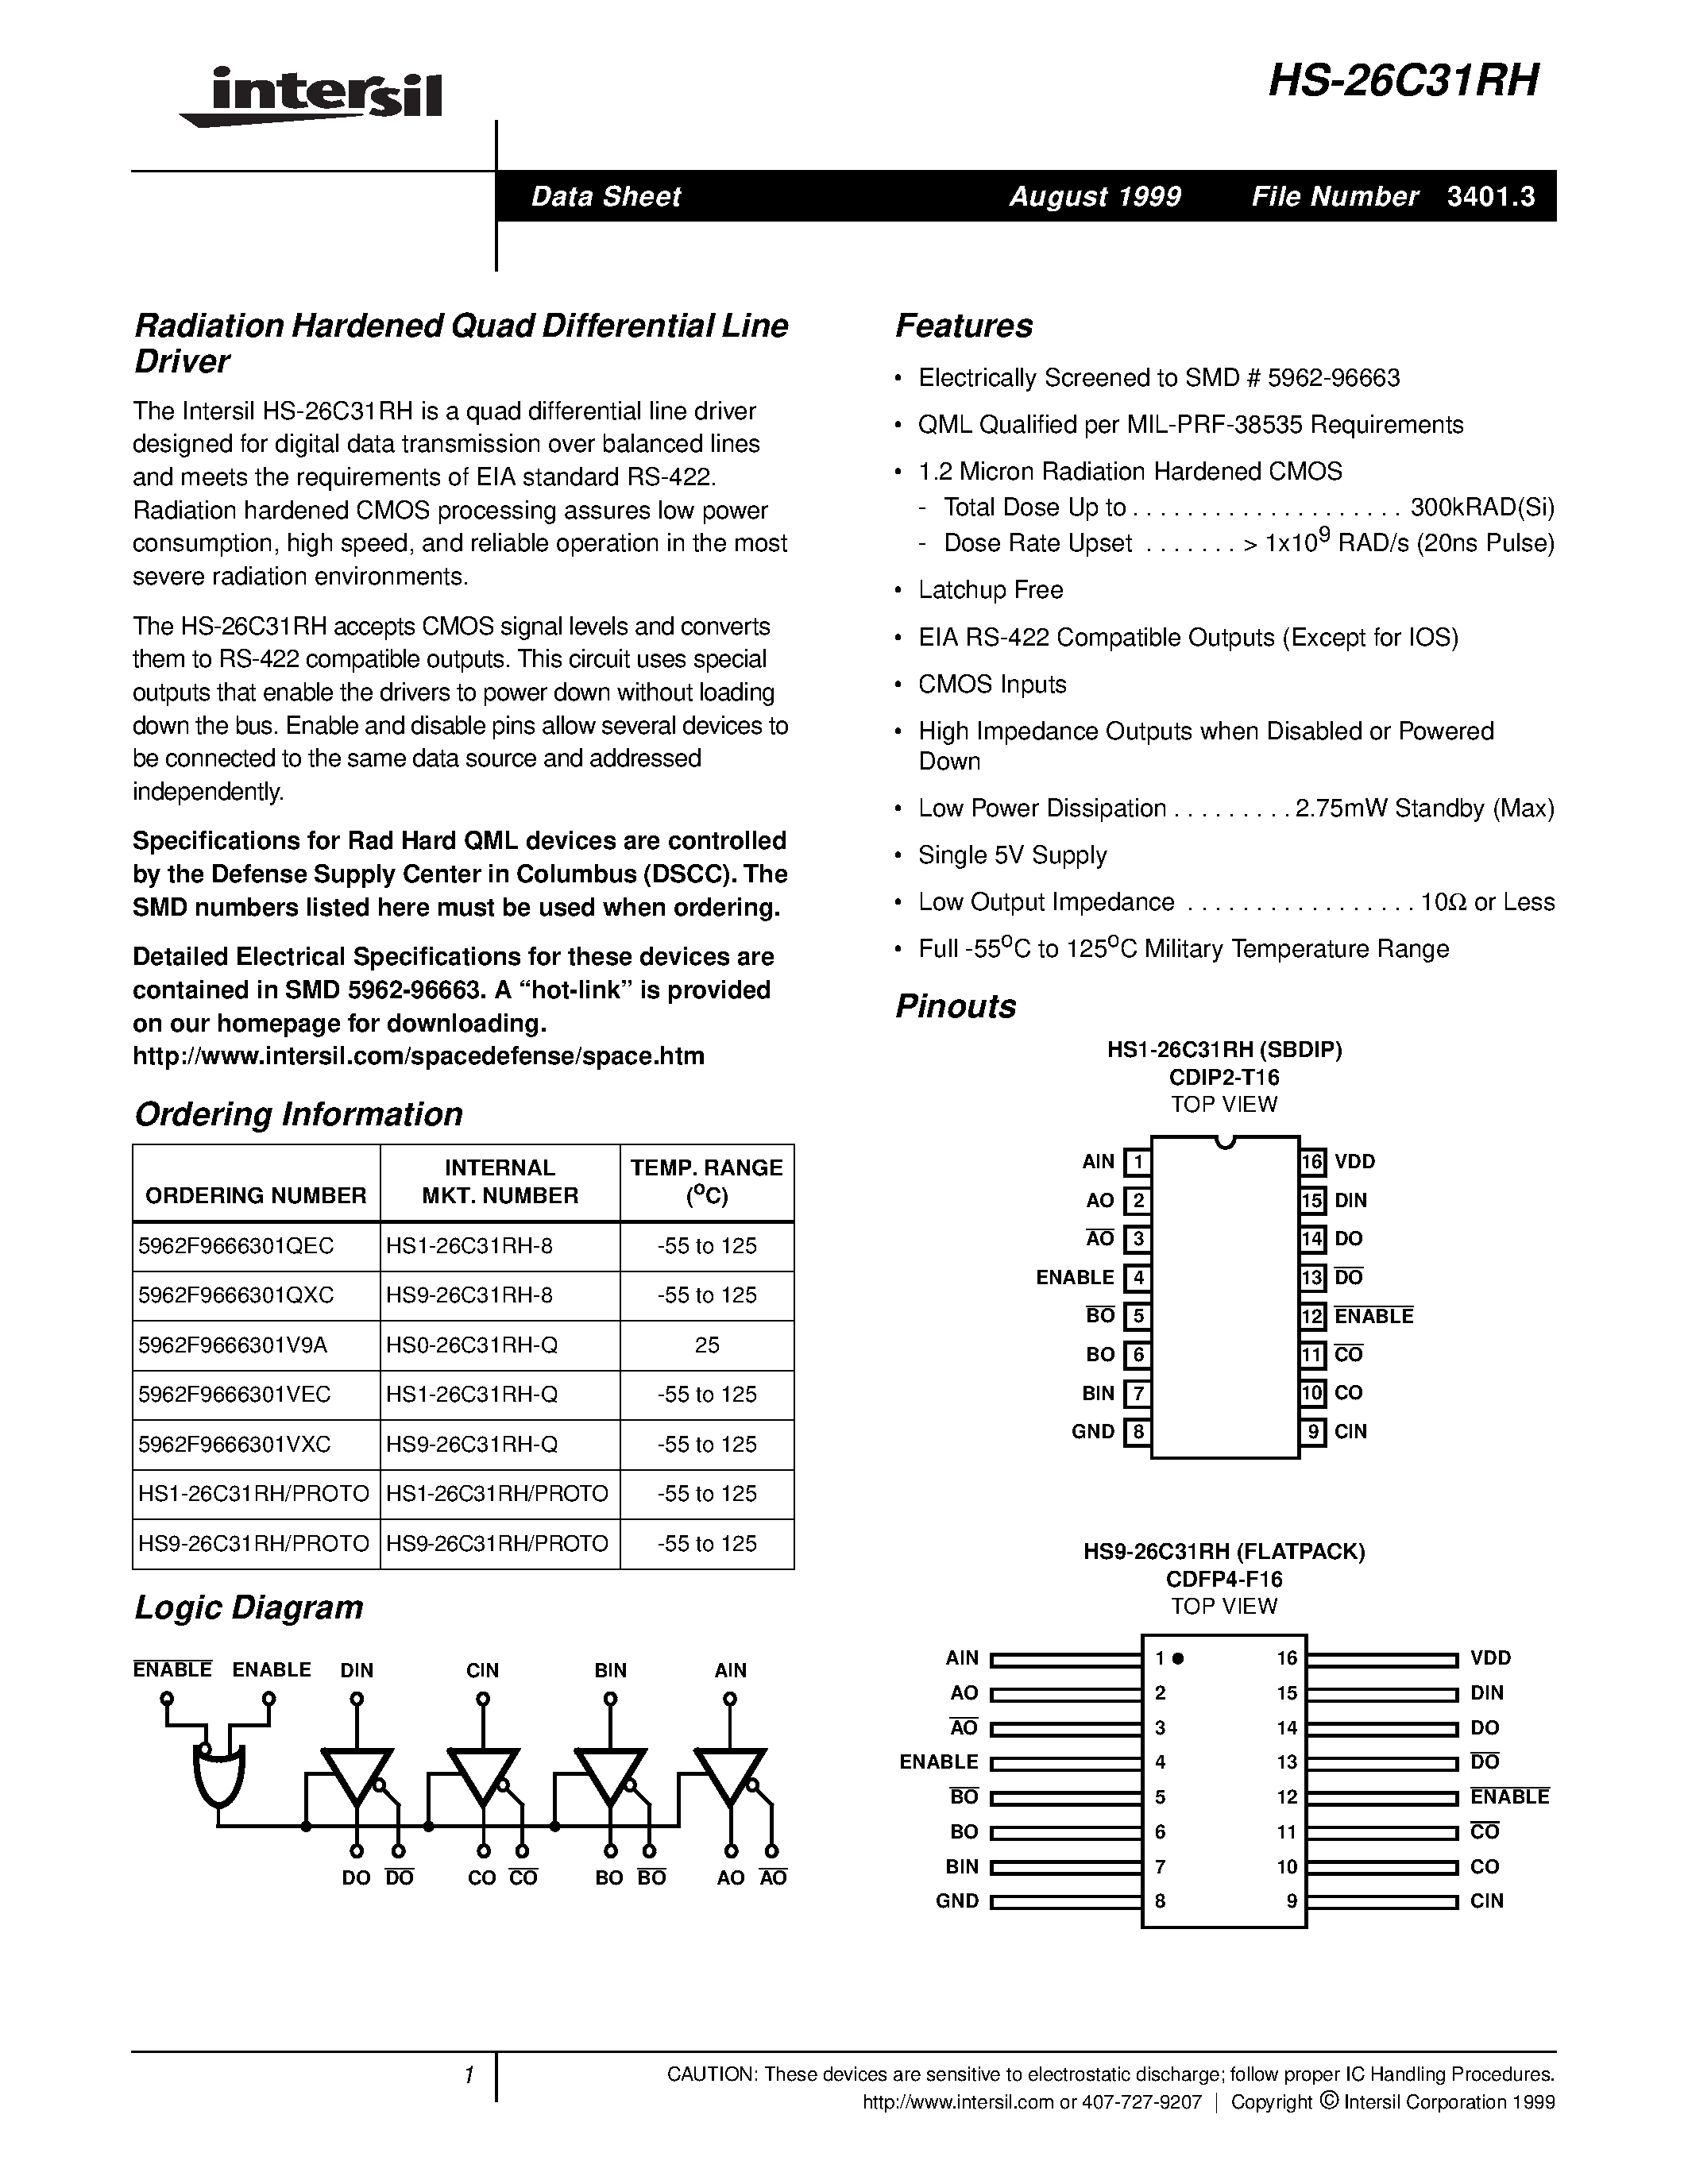 Datasheet HS1-26C31RH-Q - Radiation Hardened Quad Differential Line Driver page 1